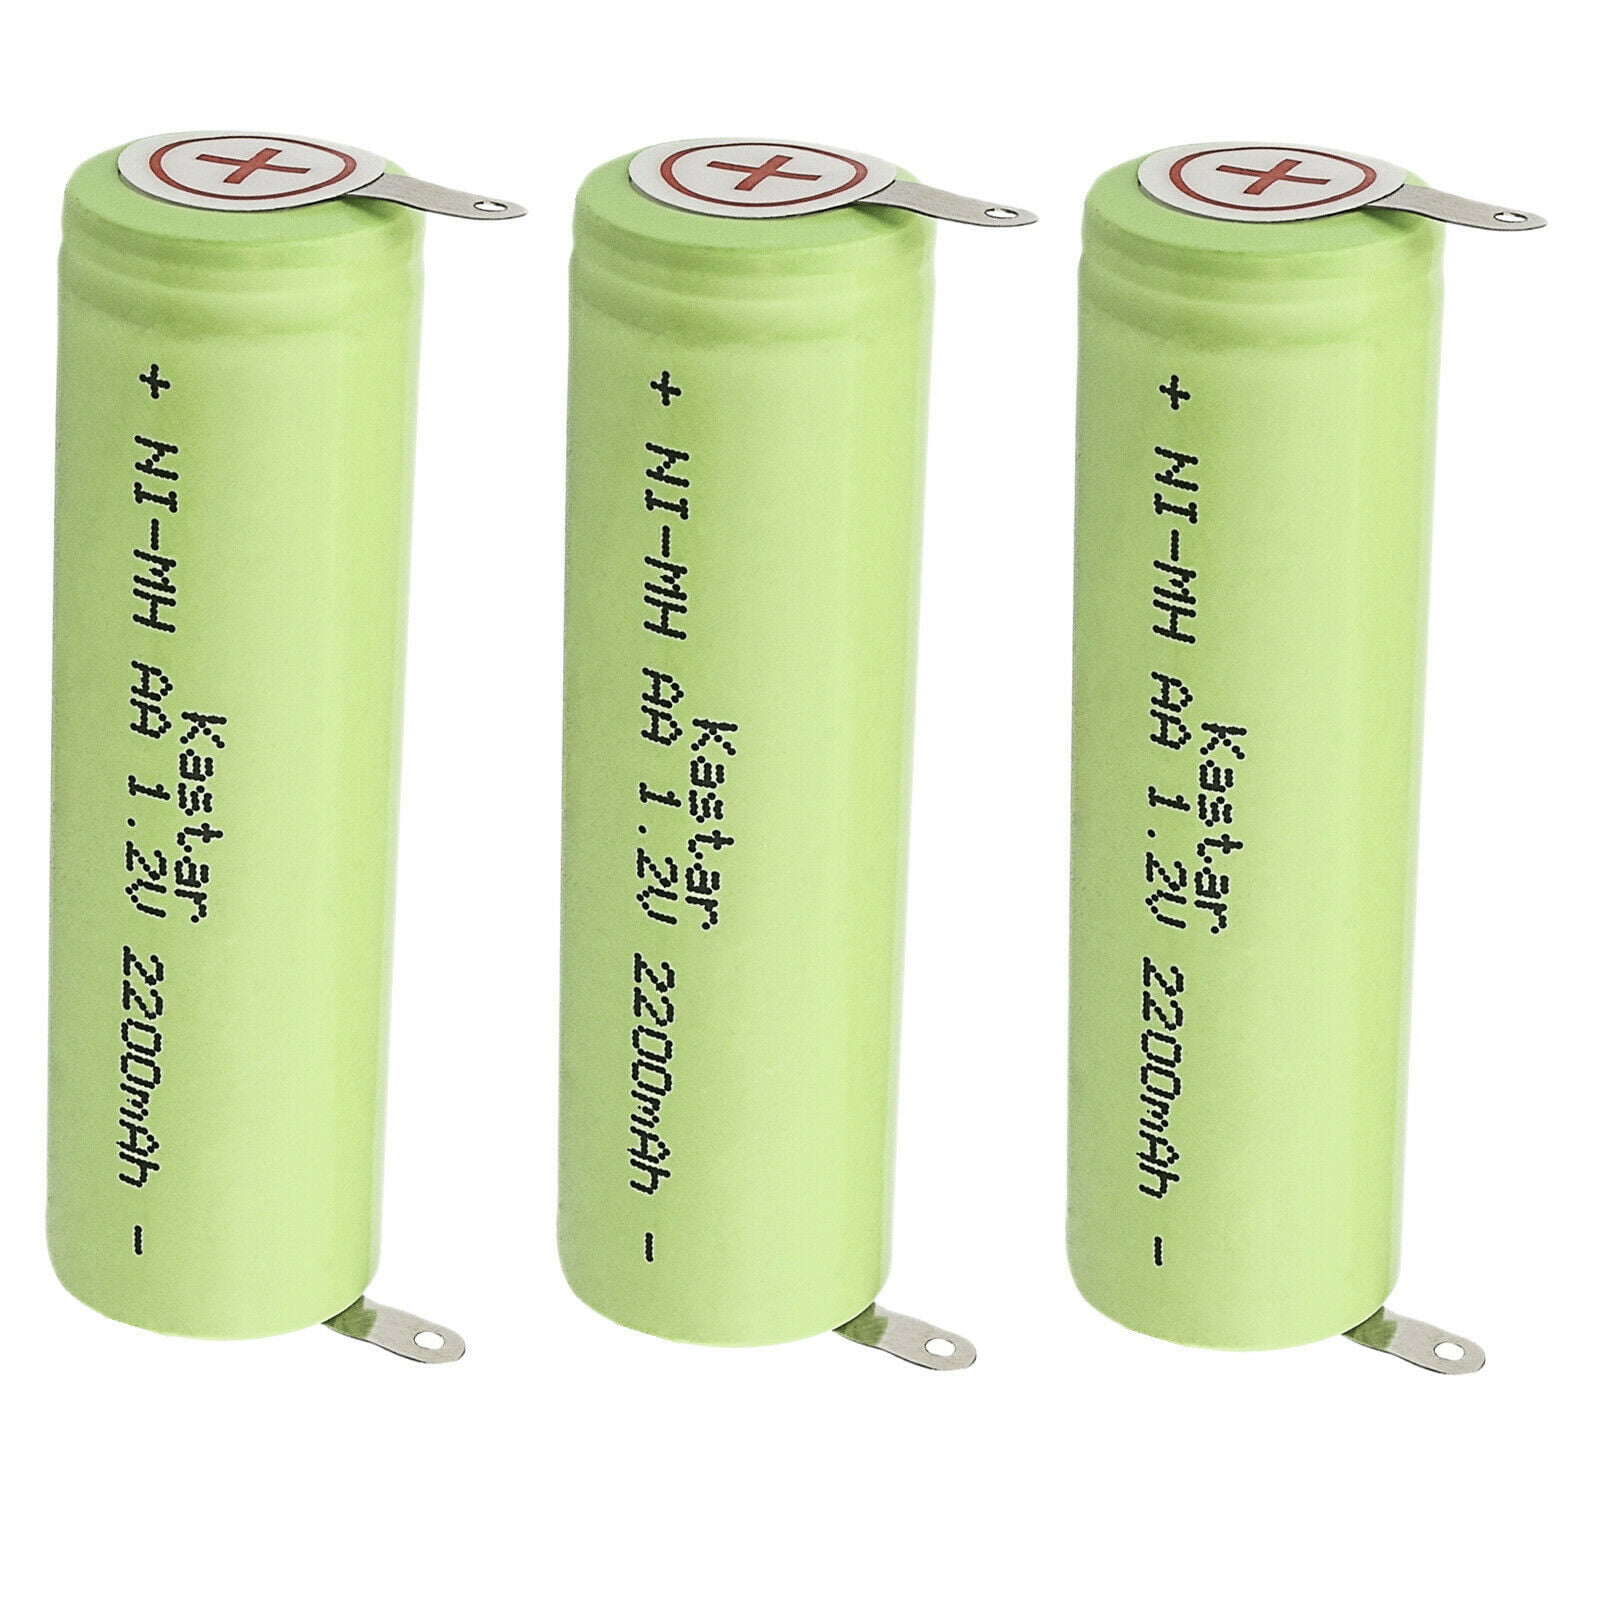 HQT388 Premium Battery for Philips HQT788 HQT360 HQT562 HQT3 HQC281 HQ6675 